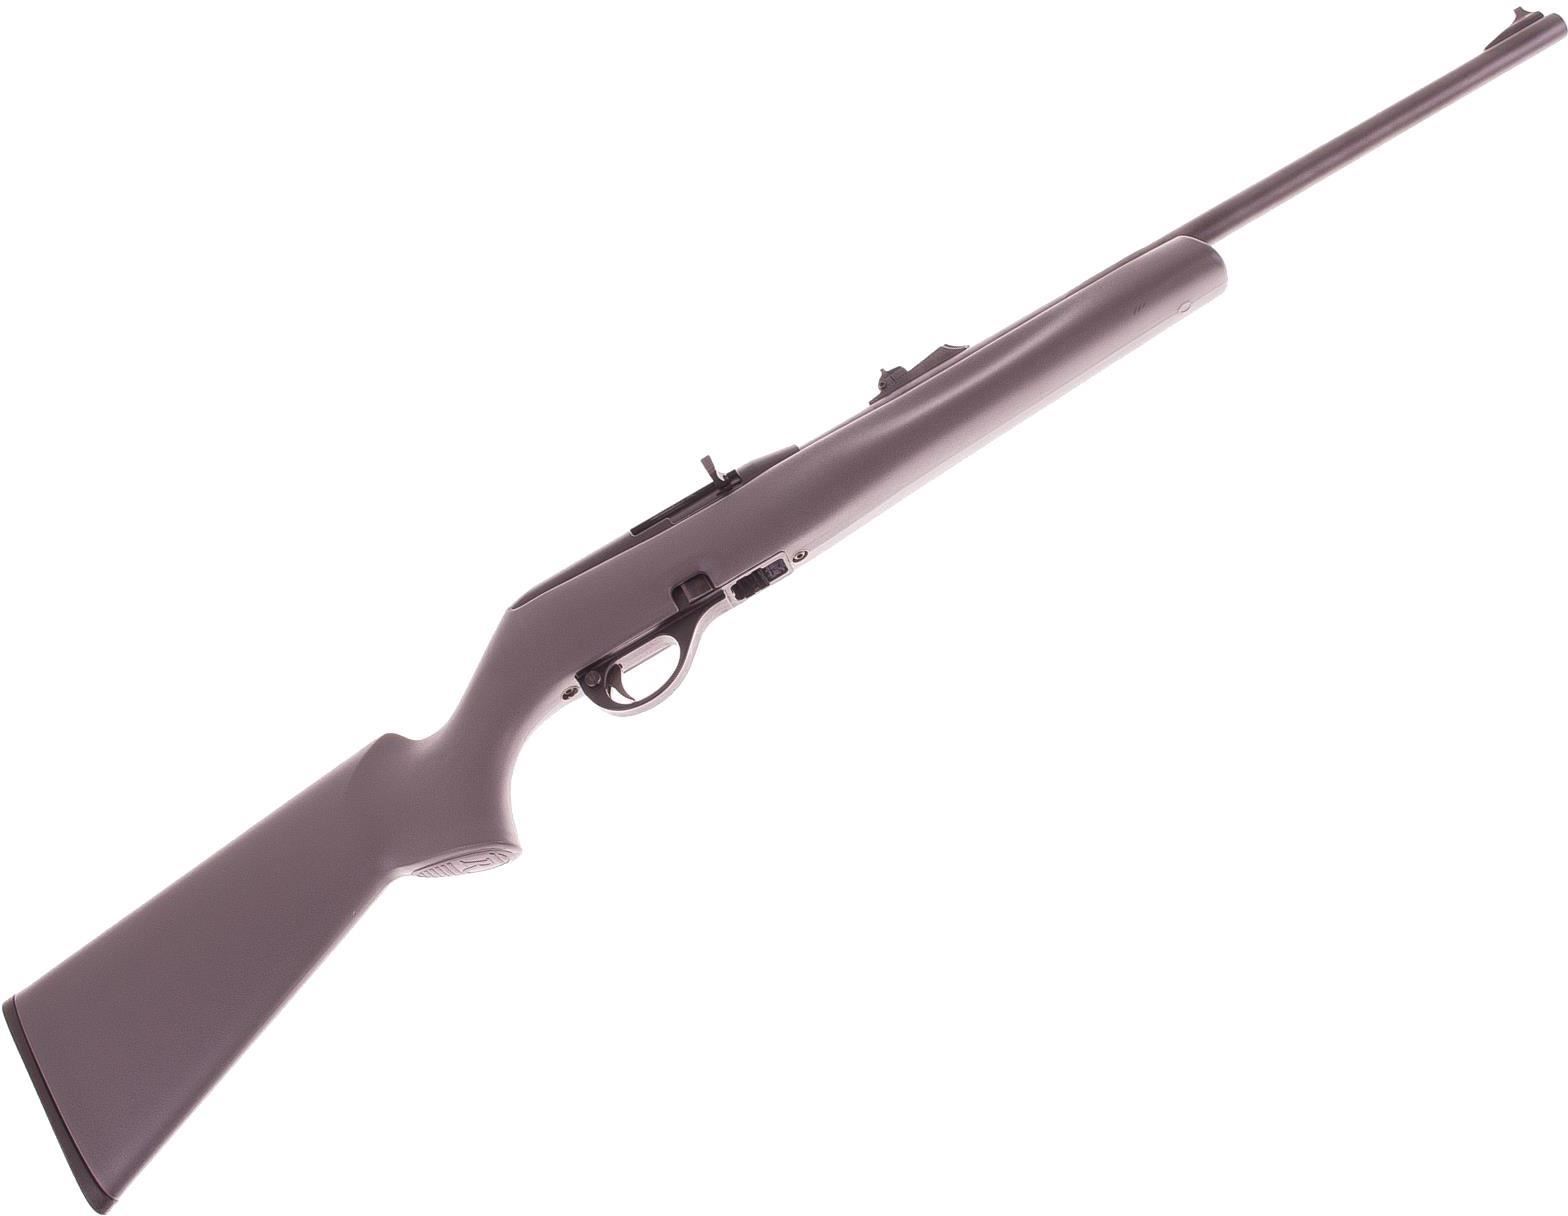 22 remington rifle